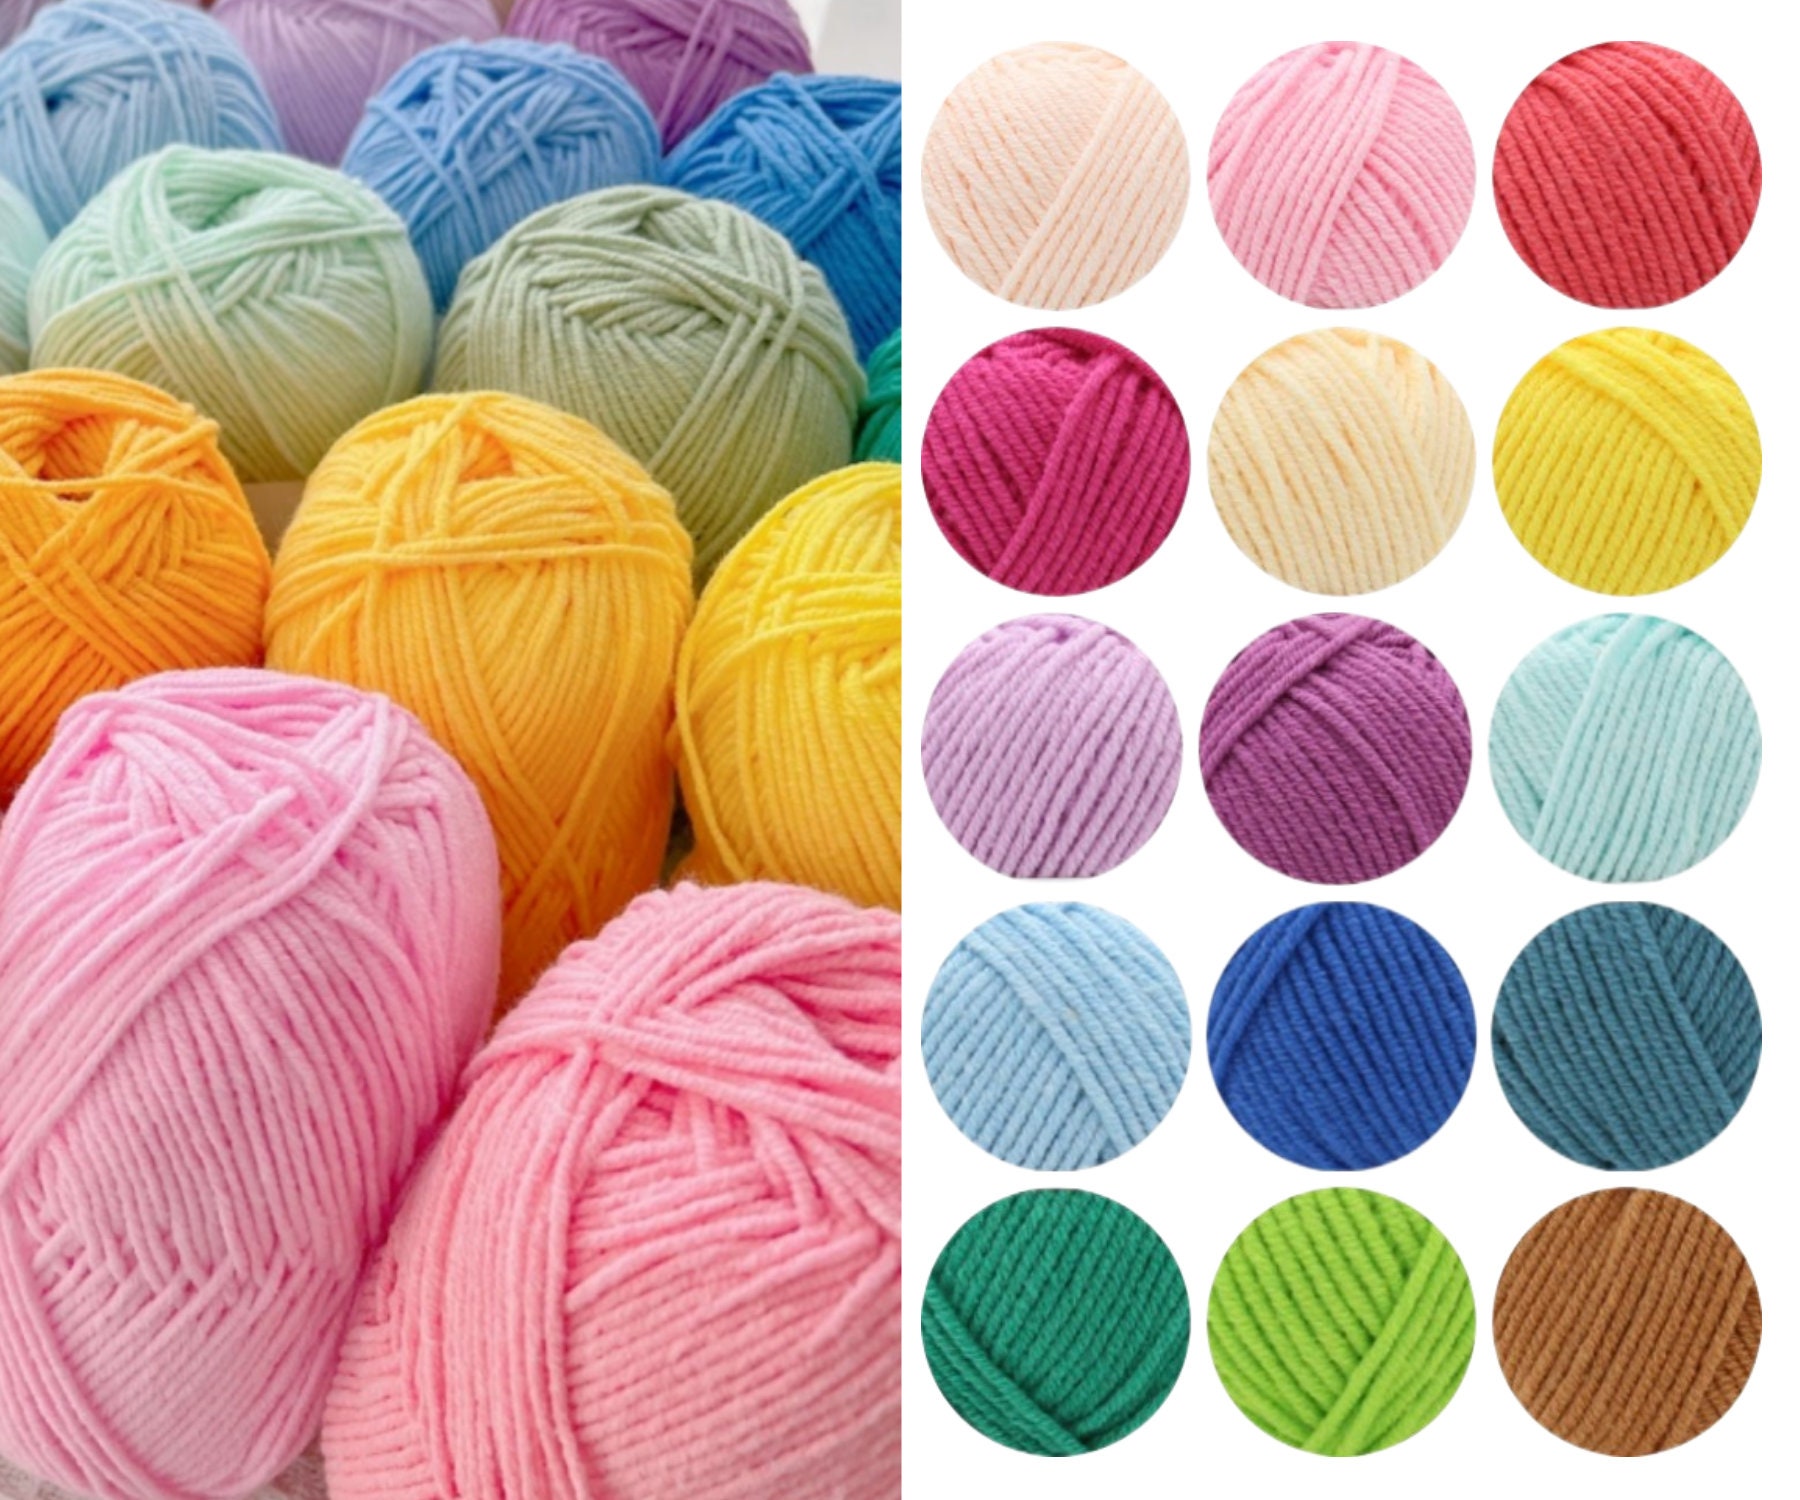 Milk Cotton Yarn for Knitting Sweaters, 4-ply Silk Crochet Threads